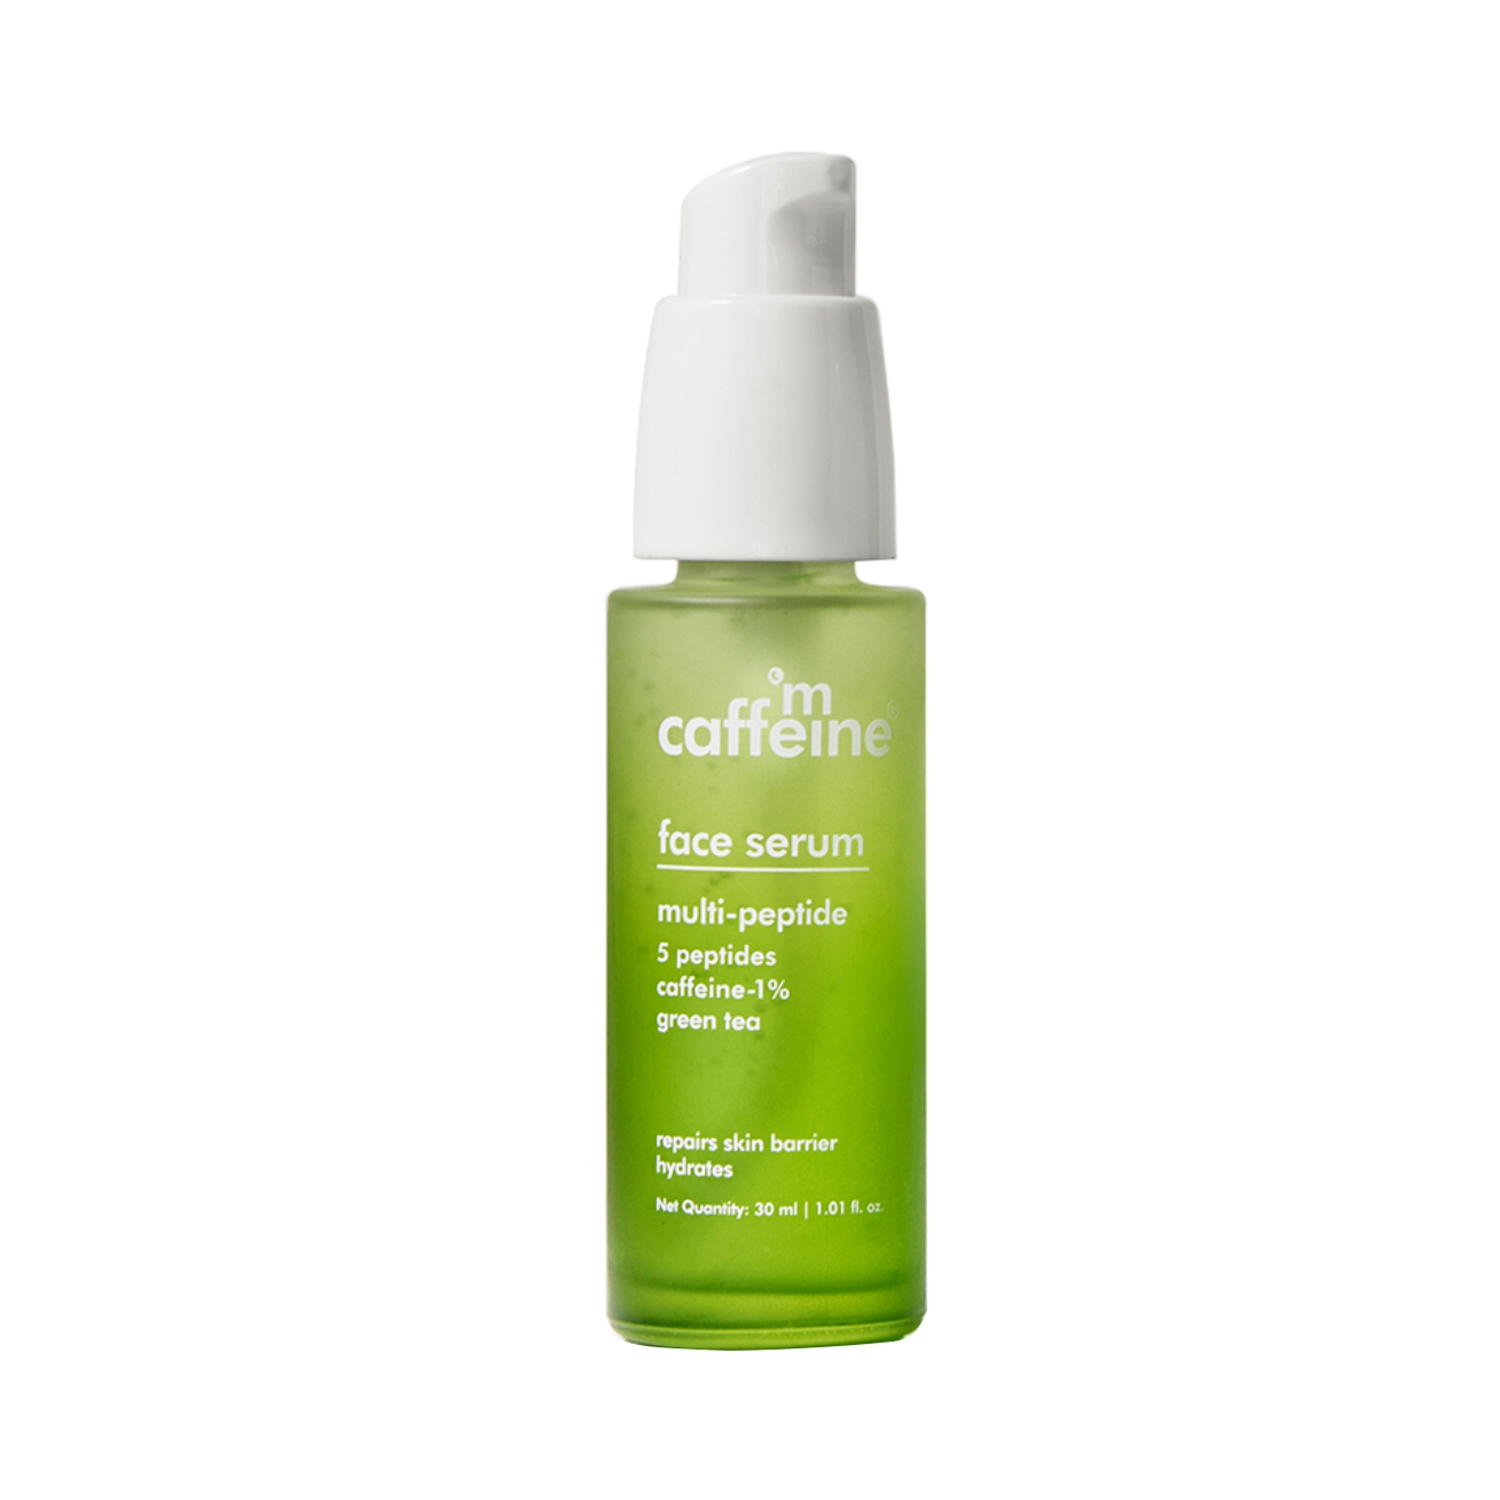 mCaffeine | mCaffeine Green Tea & Multi-Peptide Face Serum (30ml)